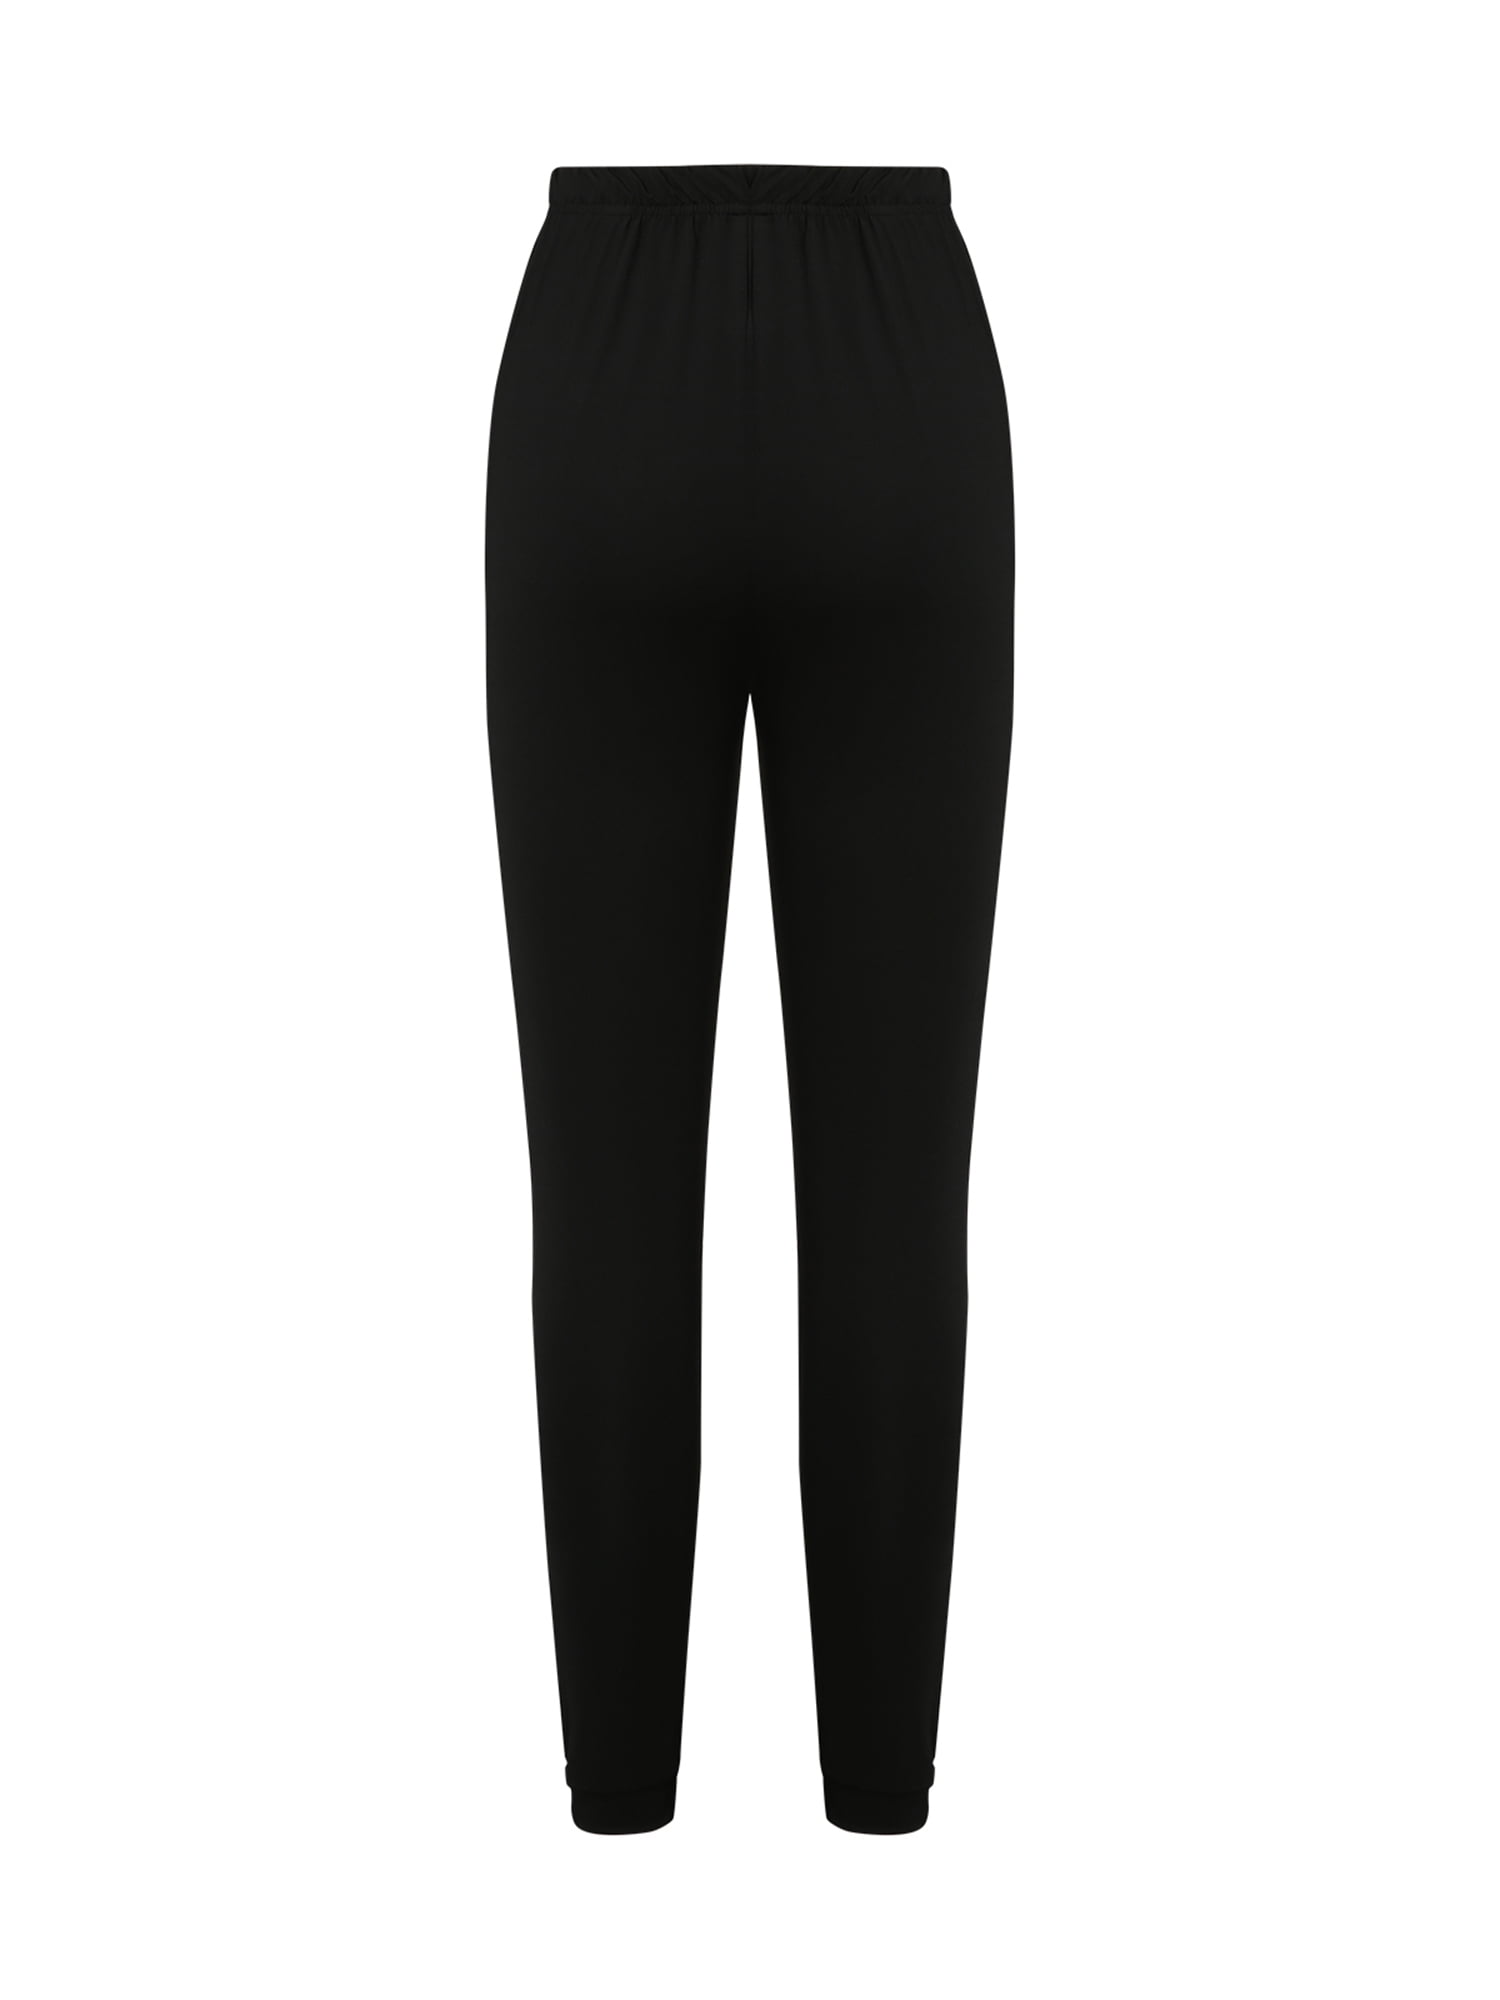 wybzd Women Leggings Plus Size Stretch Floral Lace Splice Yoga Pants Tights  Clubwear Black XL